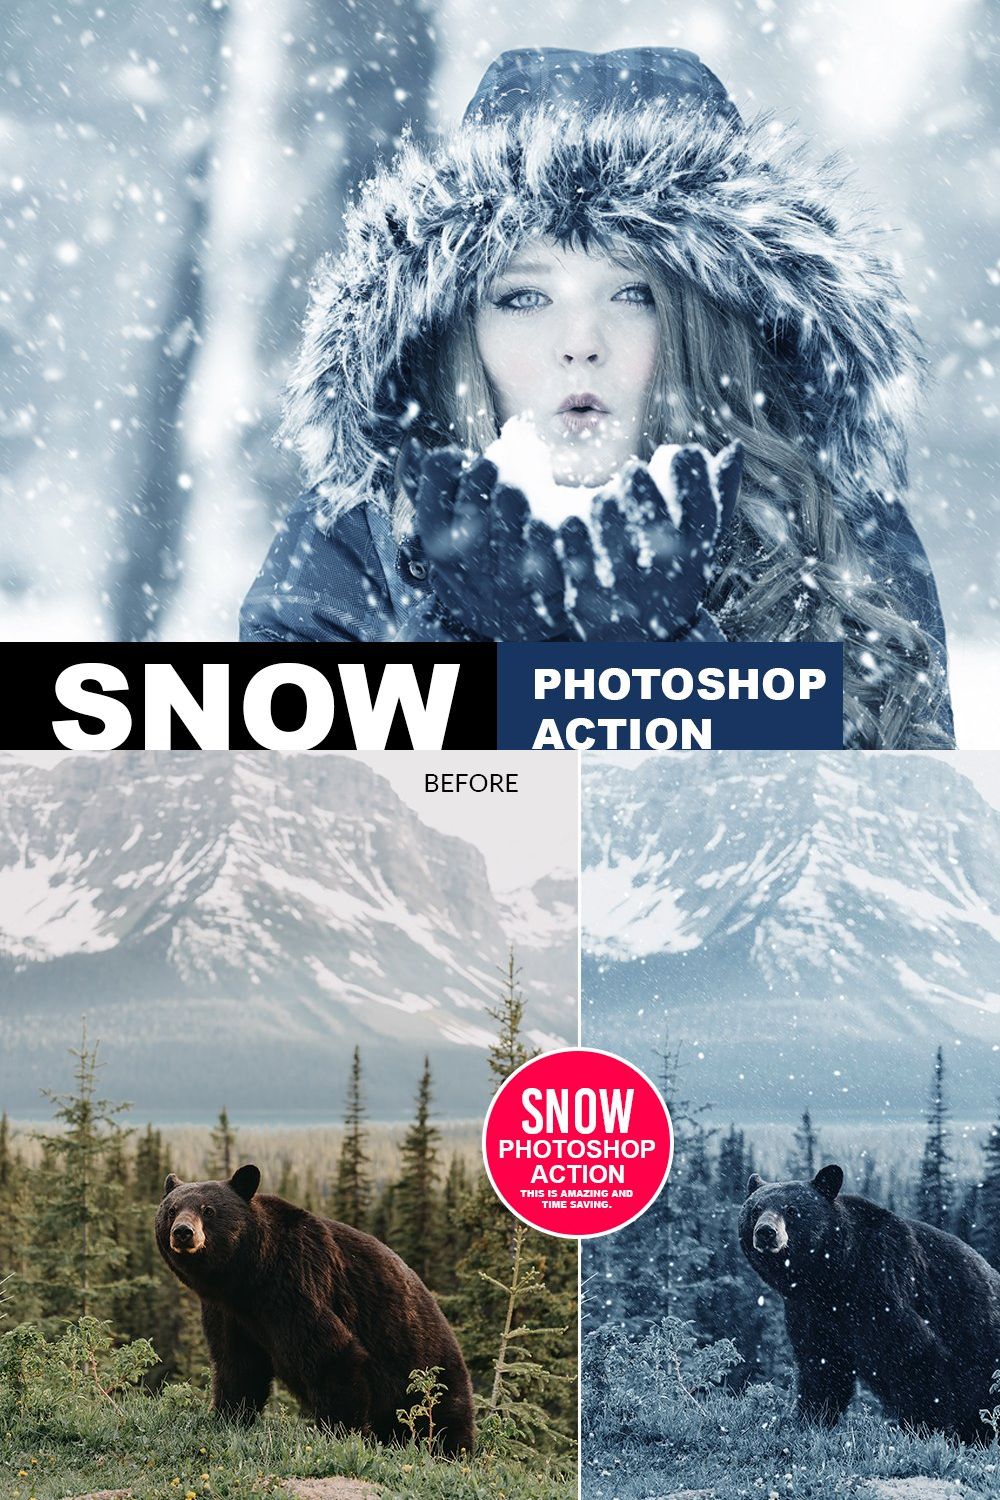 Snow Photoshop Action pinterest preview image.